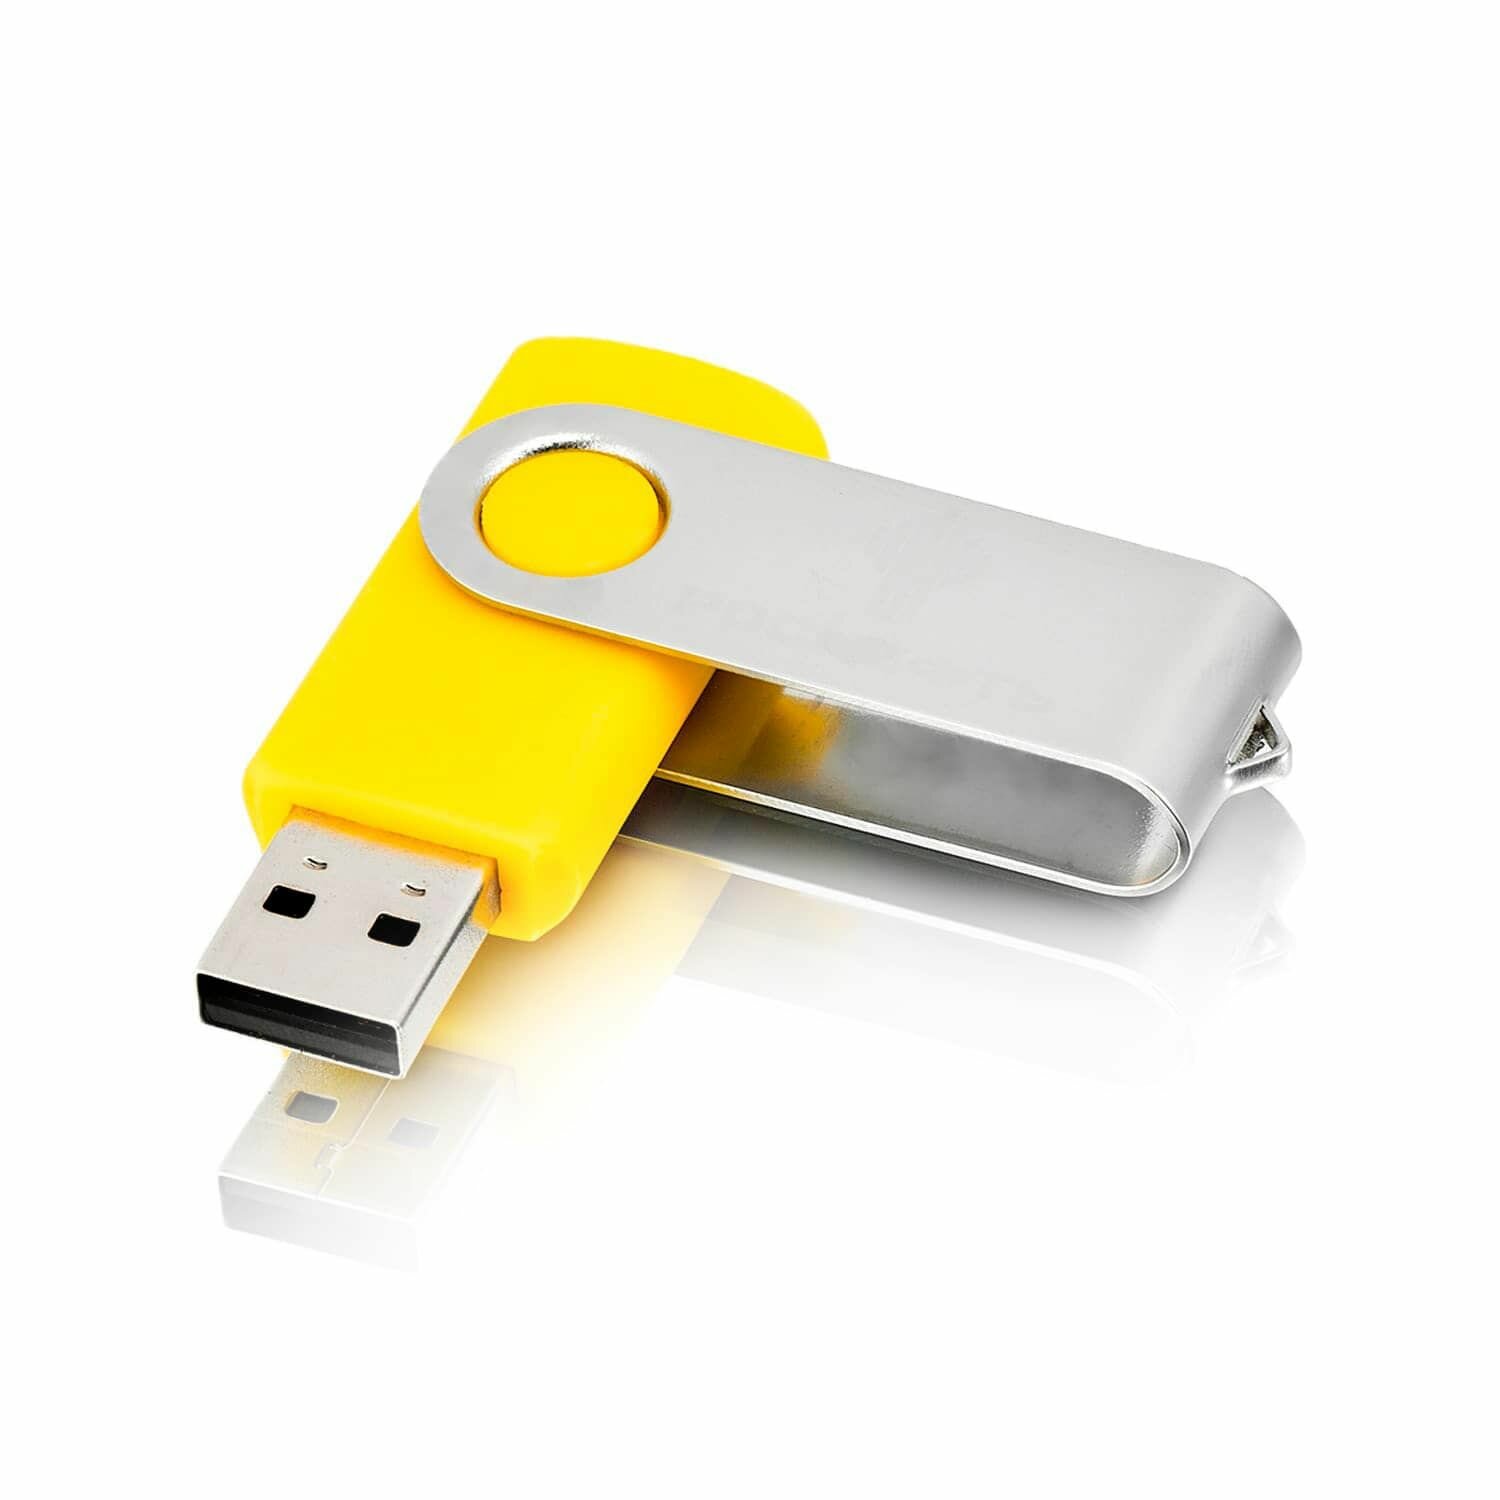 USB флешка, USB flash-накопитель, Флешка Twist, 128 МB, желтая, арт. F01 USB 2.0